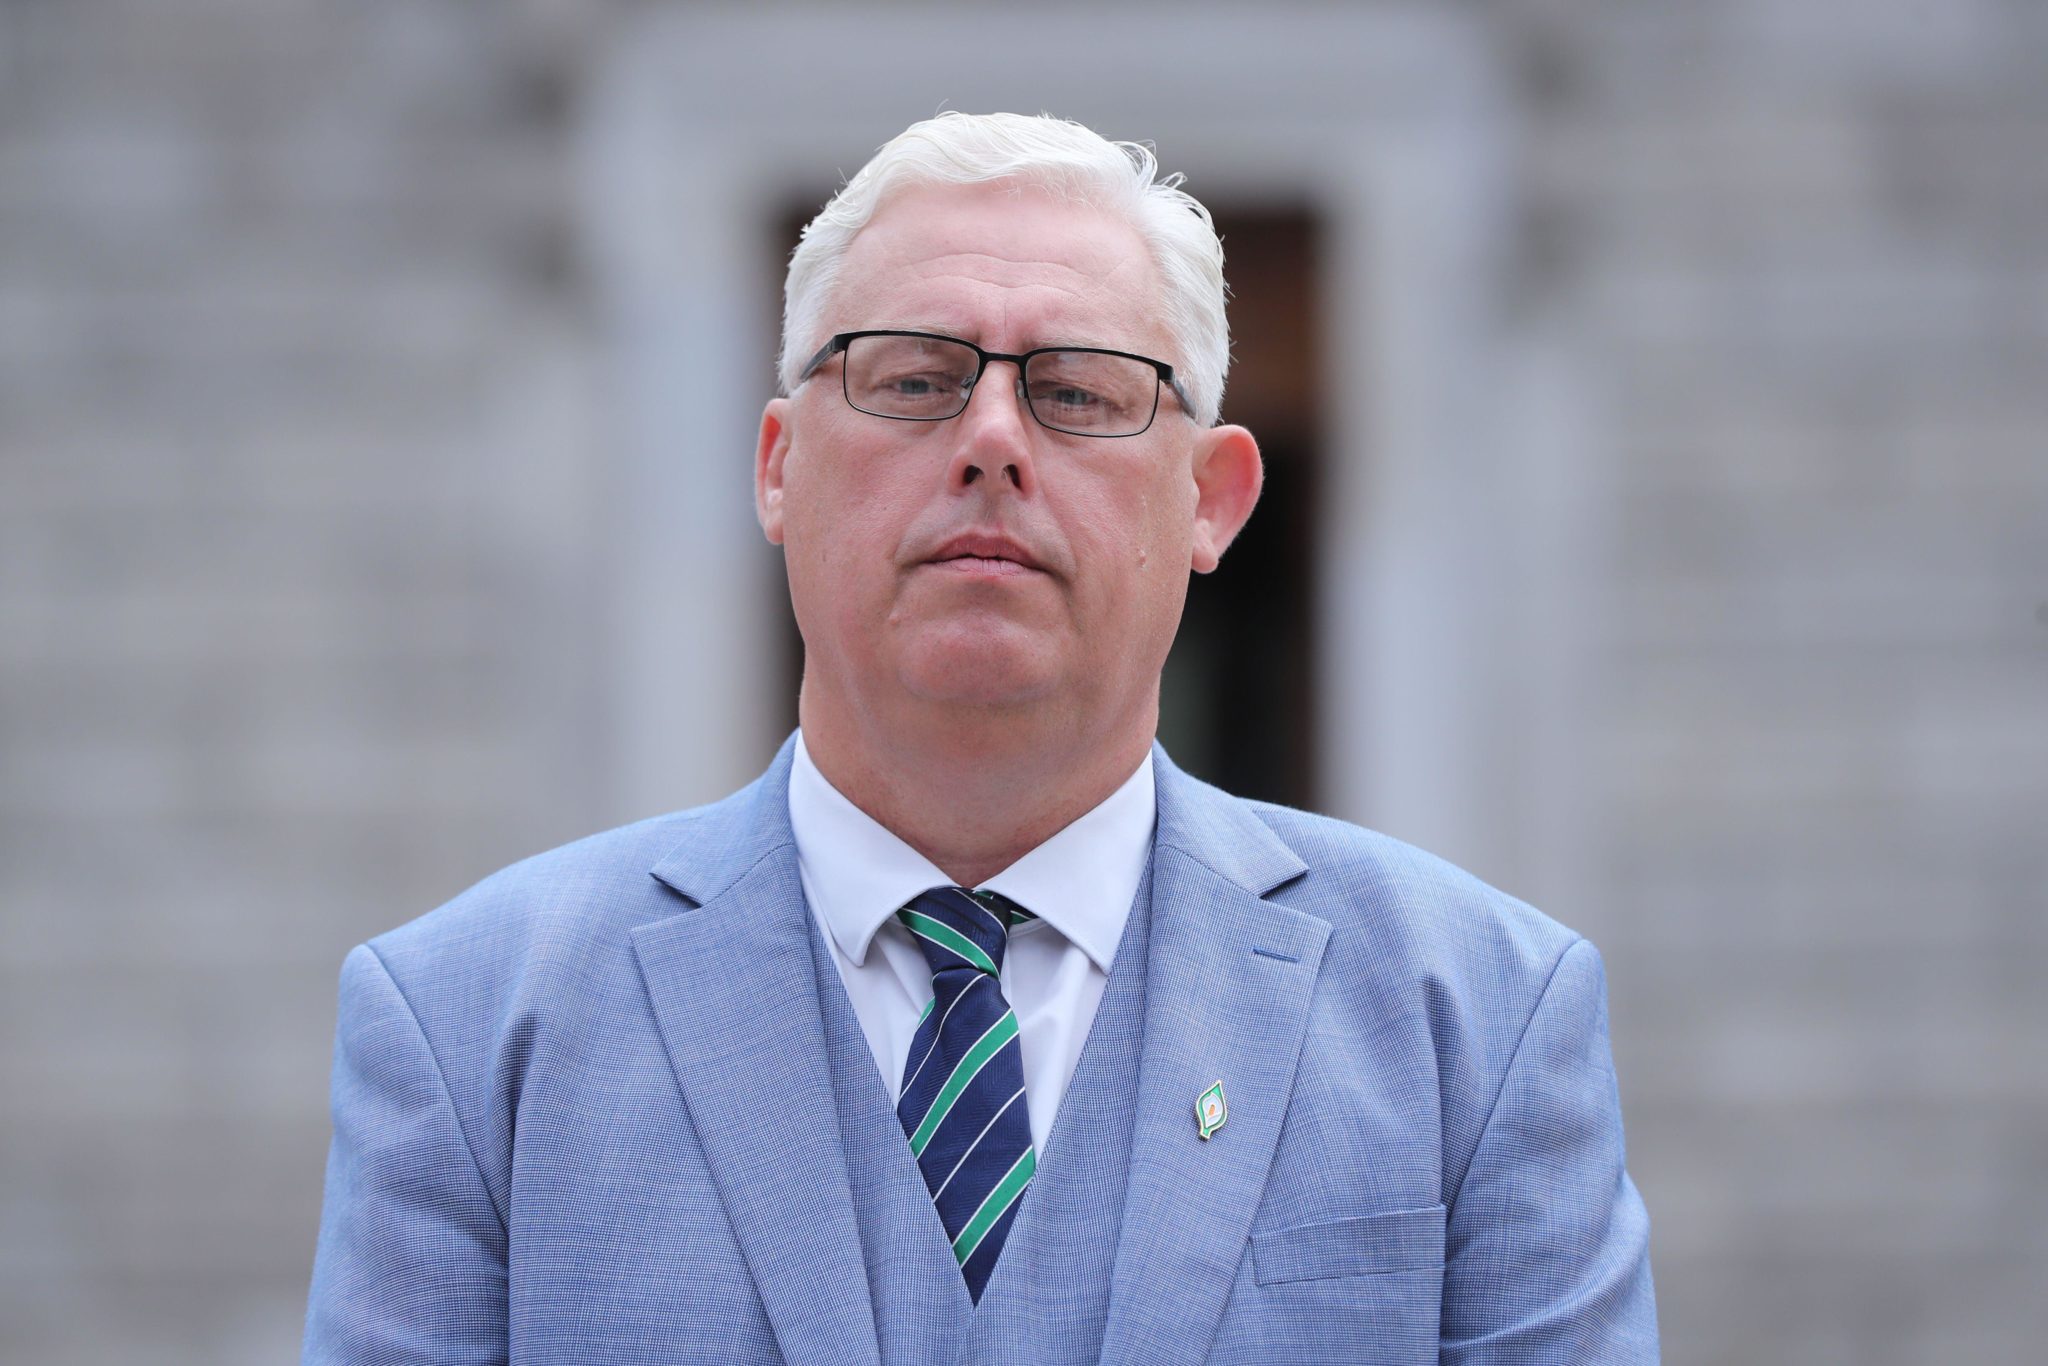 Sinn Féin TD Thomas Gould at Leinster House, 17-08-2021. Image: PA Images / Alamy Stock Photo